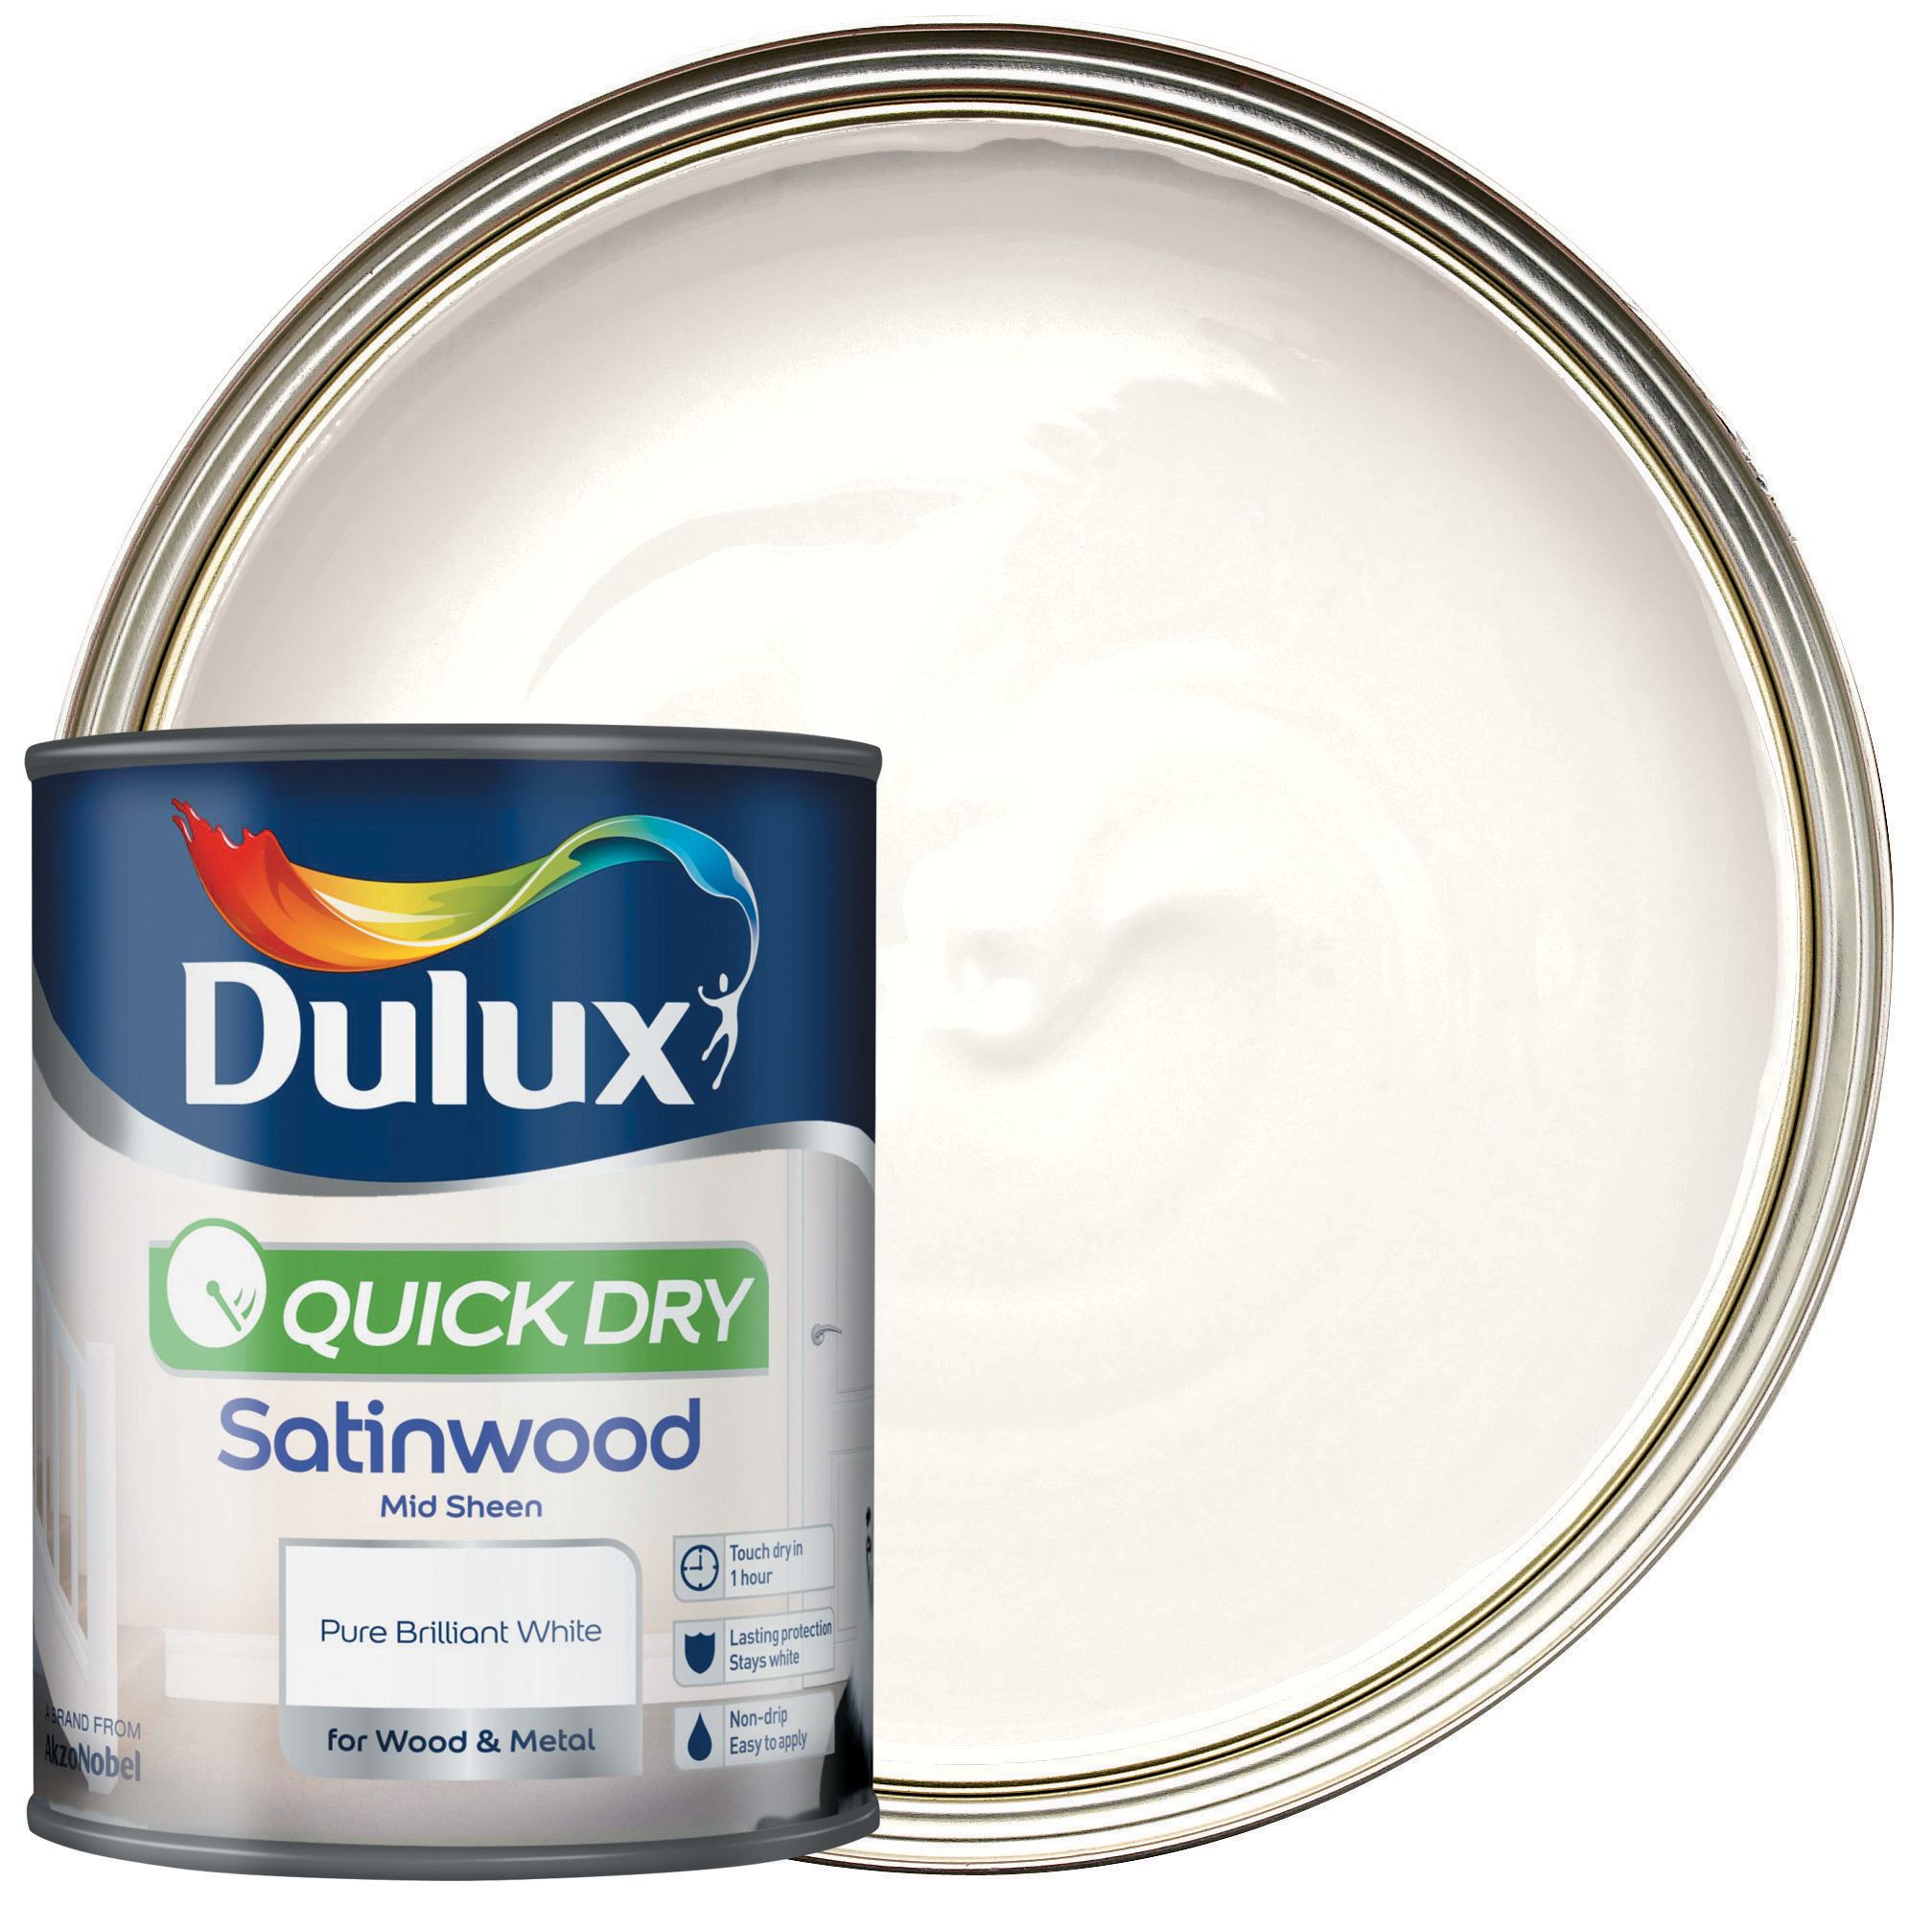 Dulux Quick Dry Satinwood Paint - Pure Brilliant White 750ml